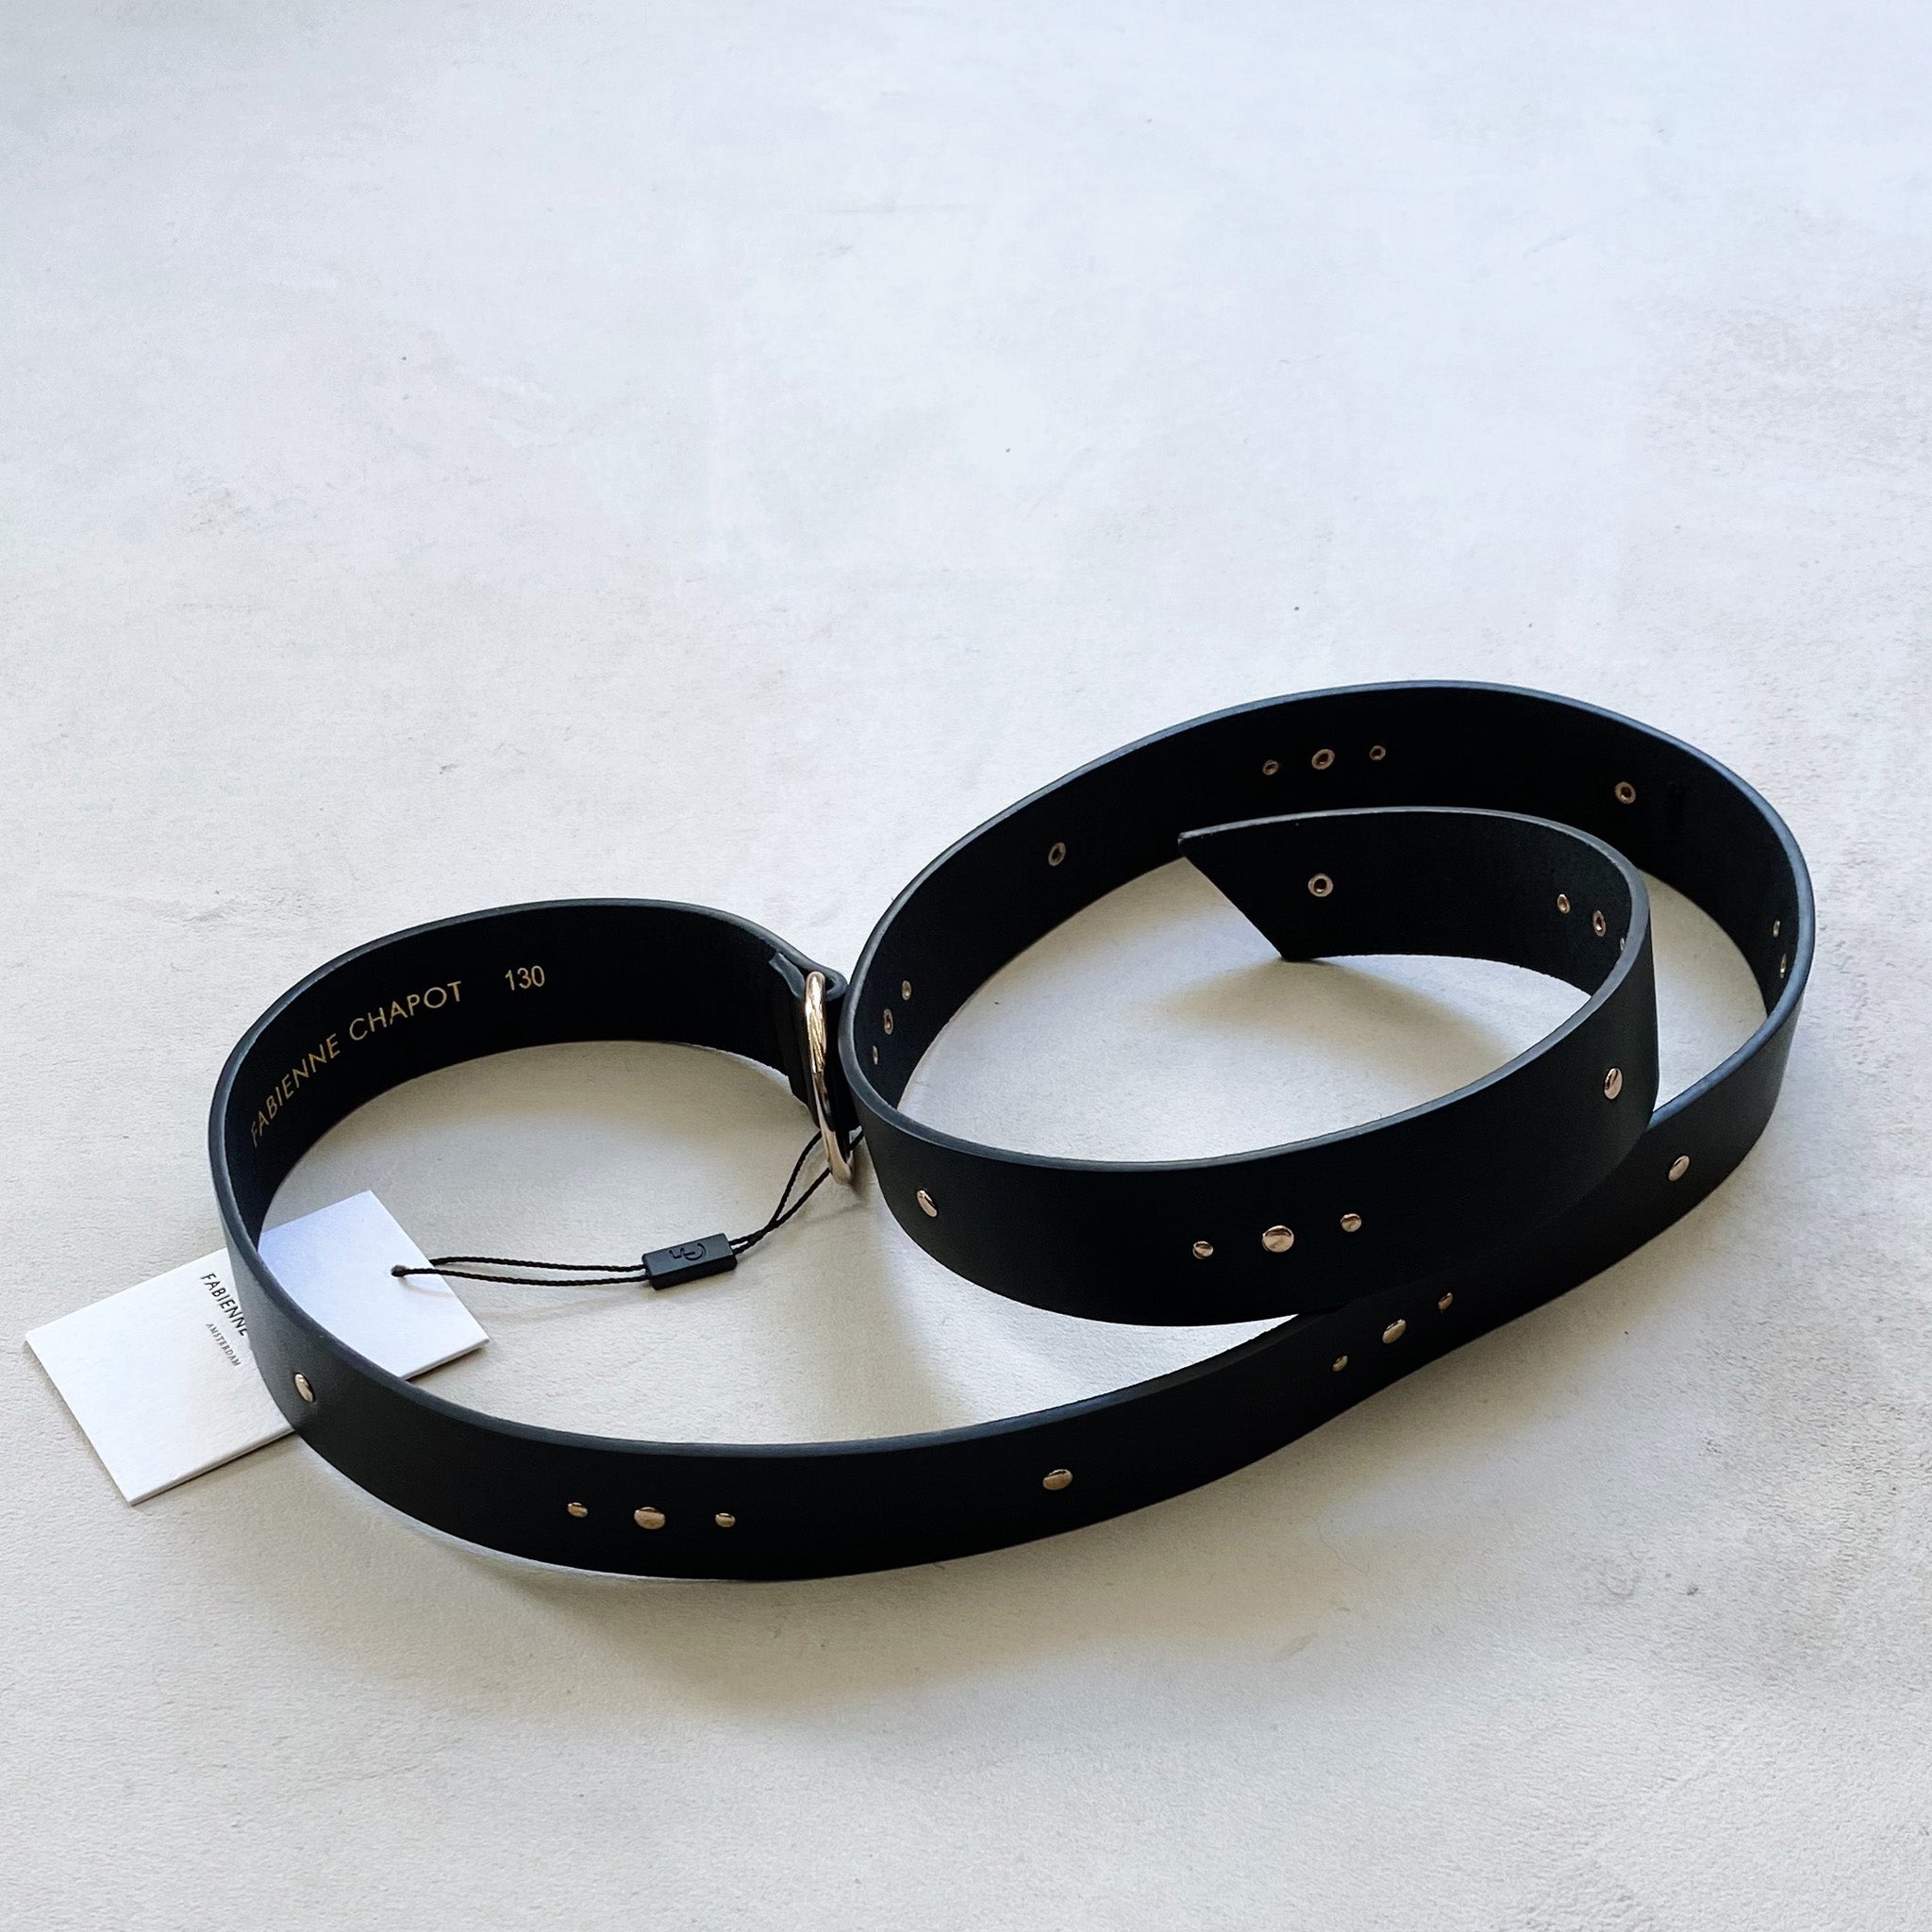 A Fabienne Chapot studded belt - black with gold studs.